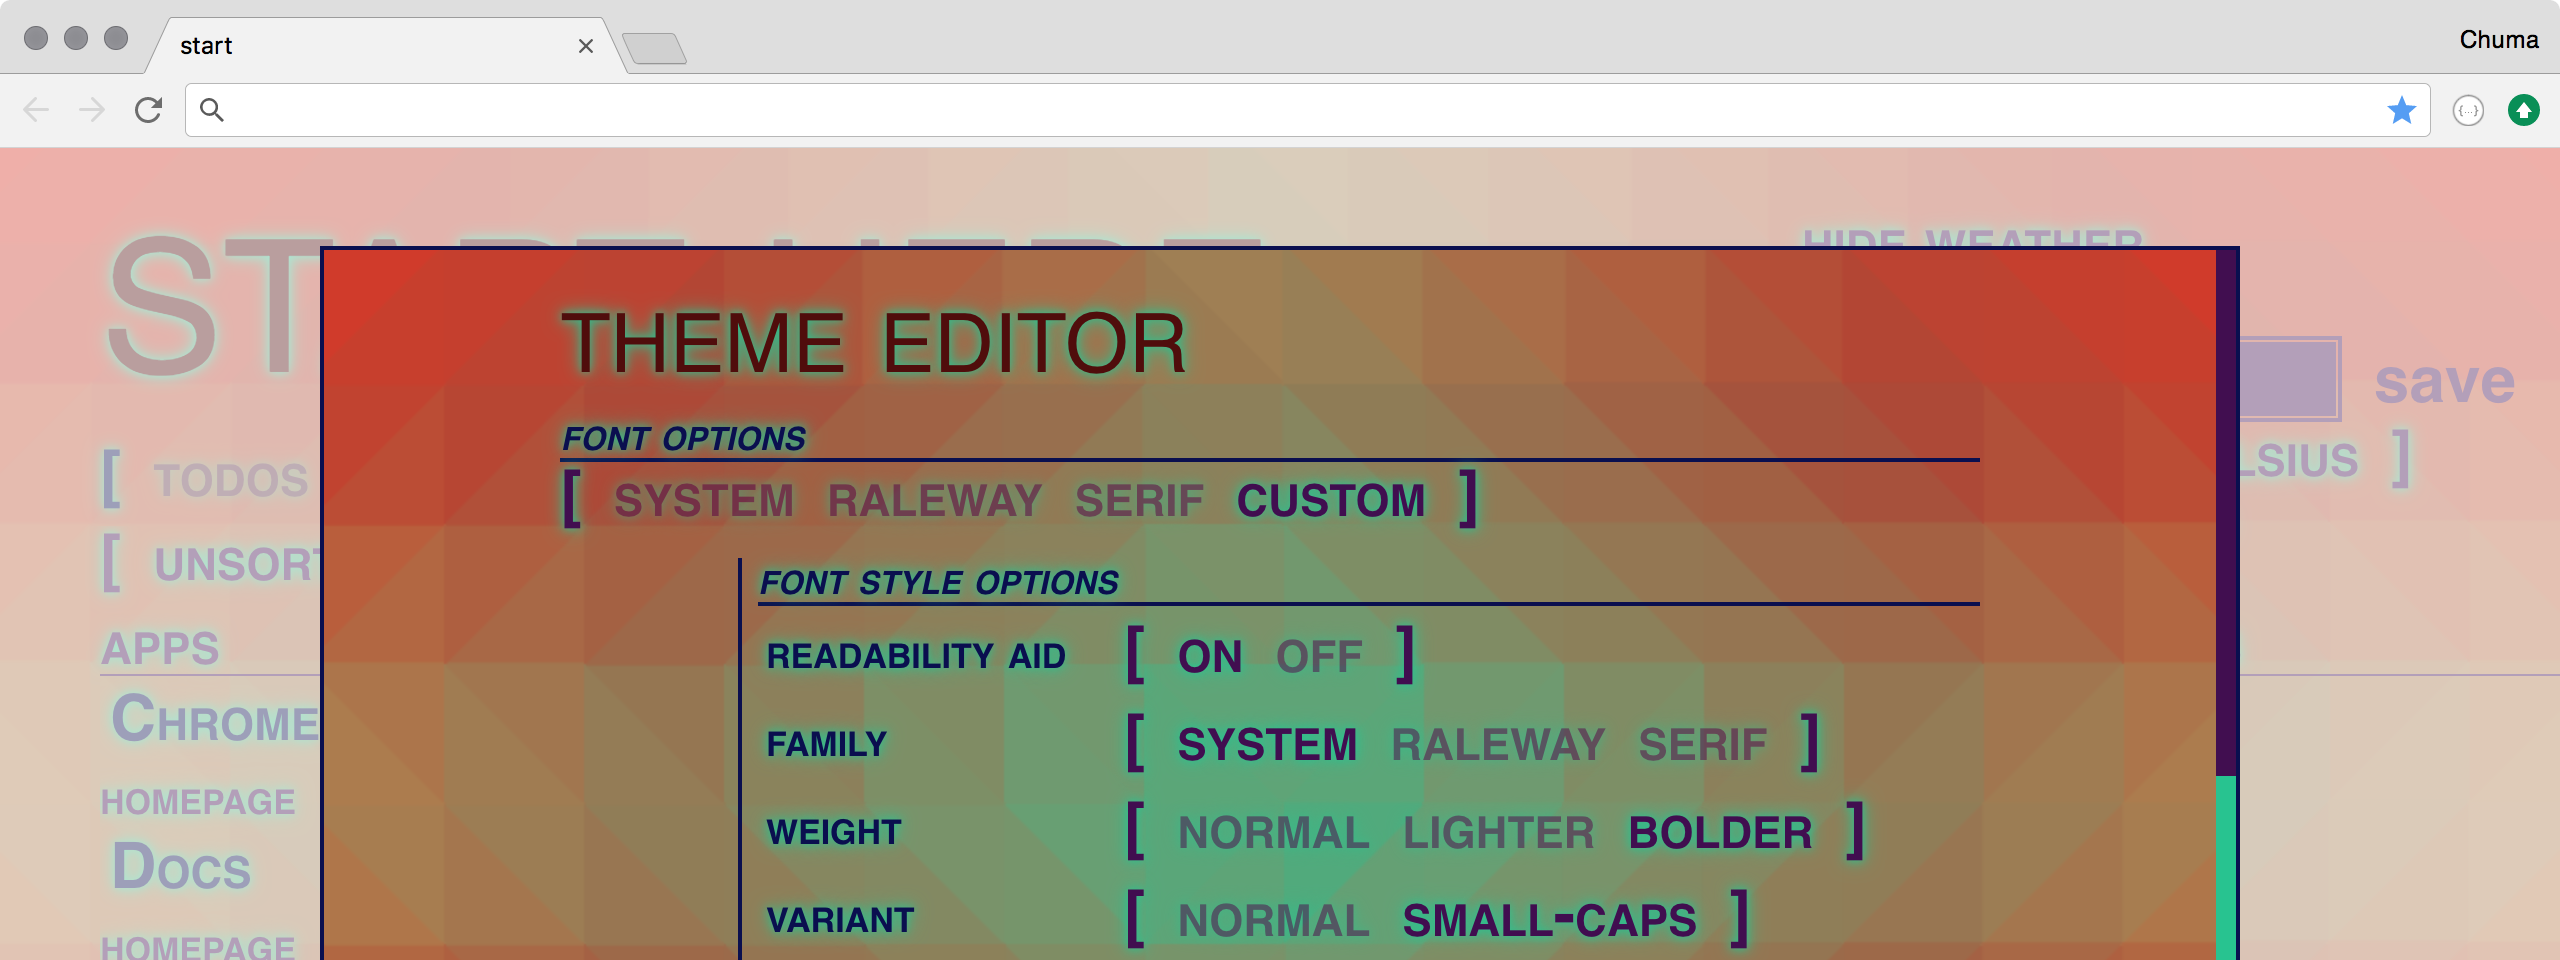 metro start theme editor.